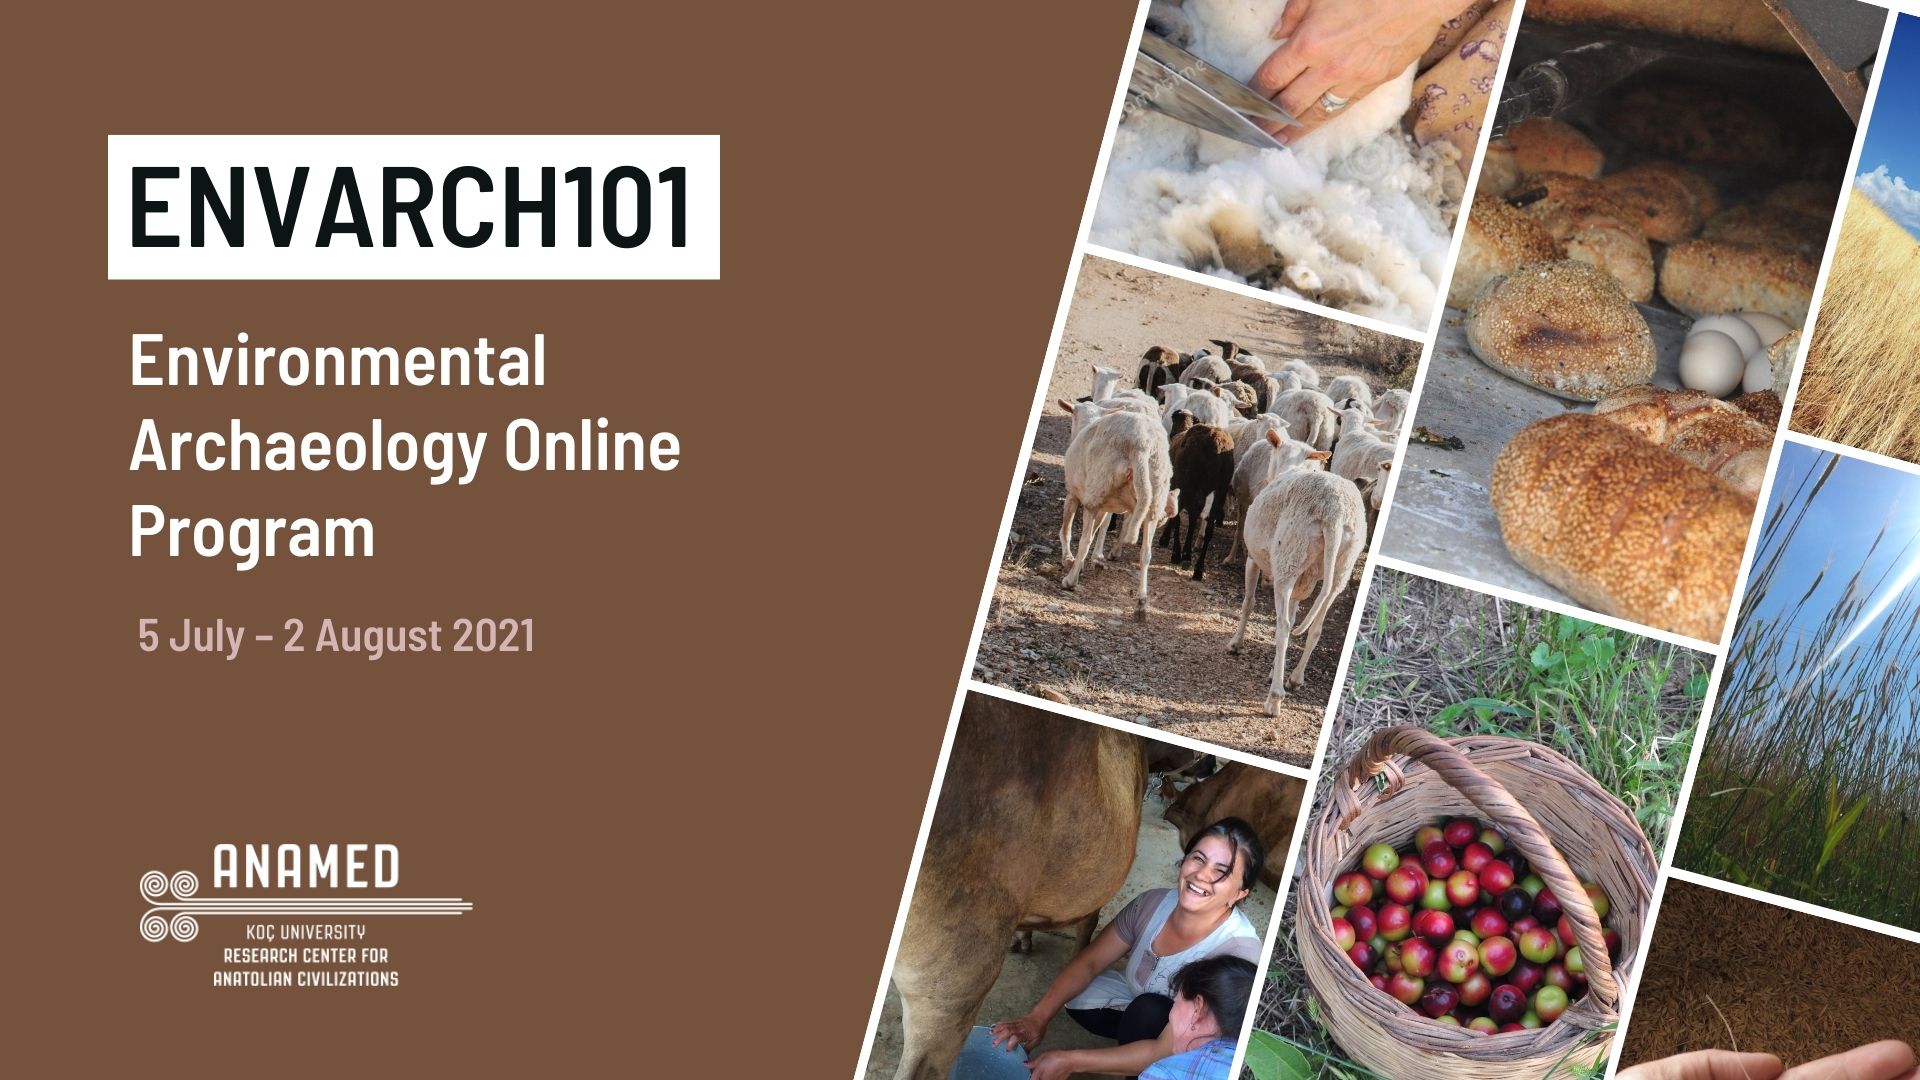 Environmental Archaeology Online Program ENVARCH101